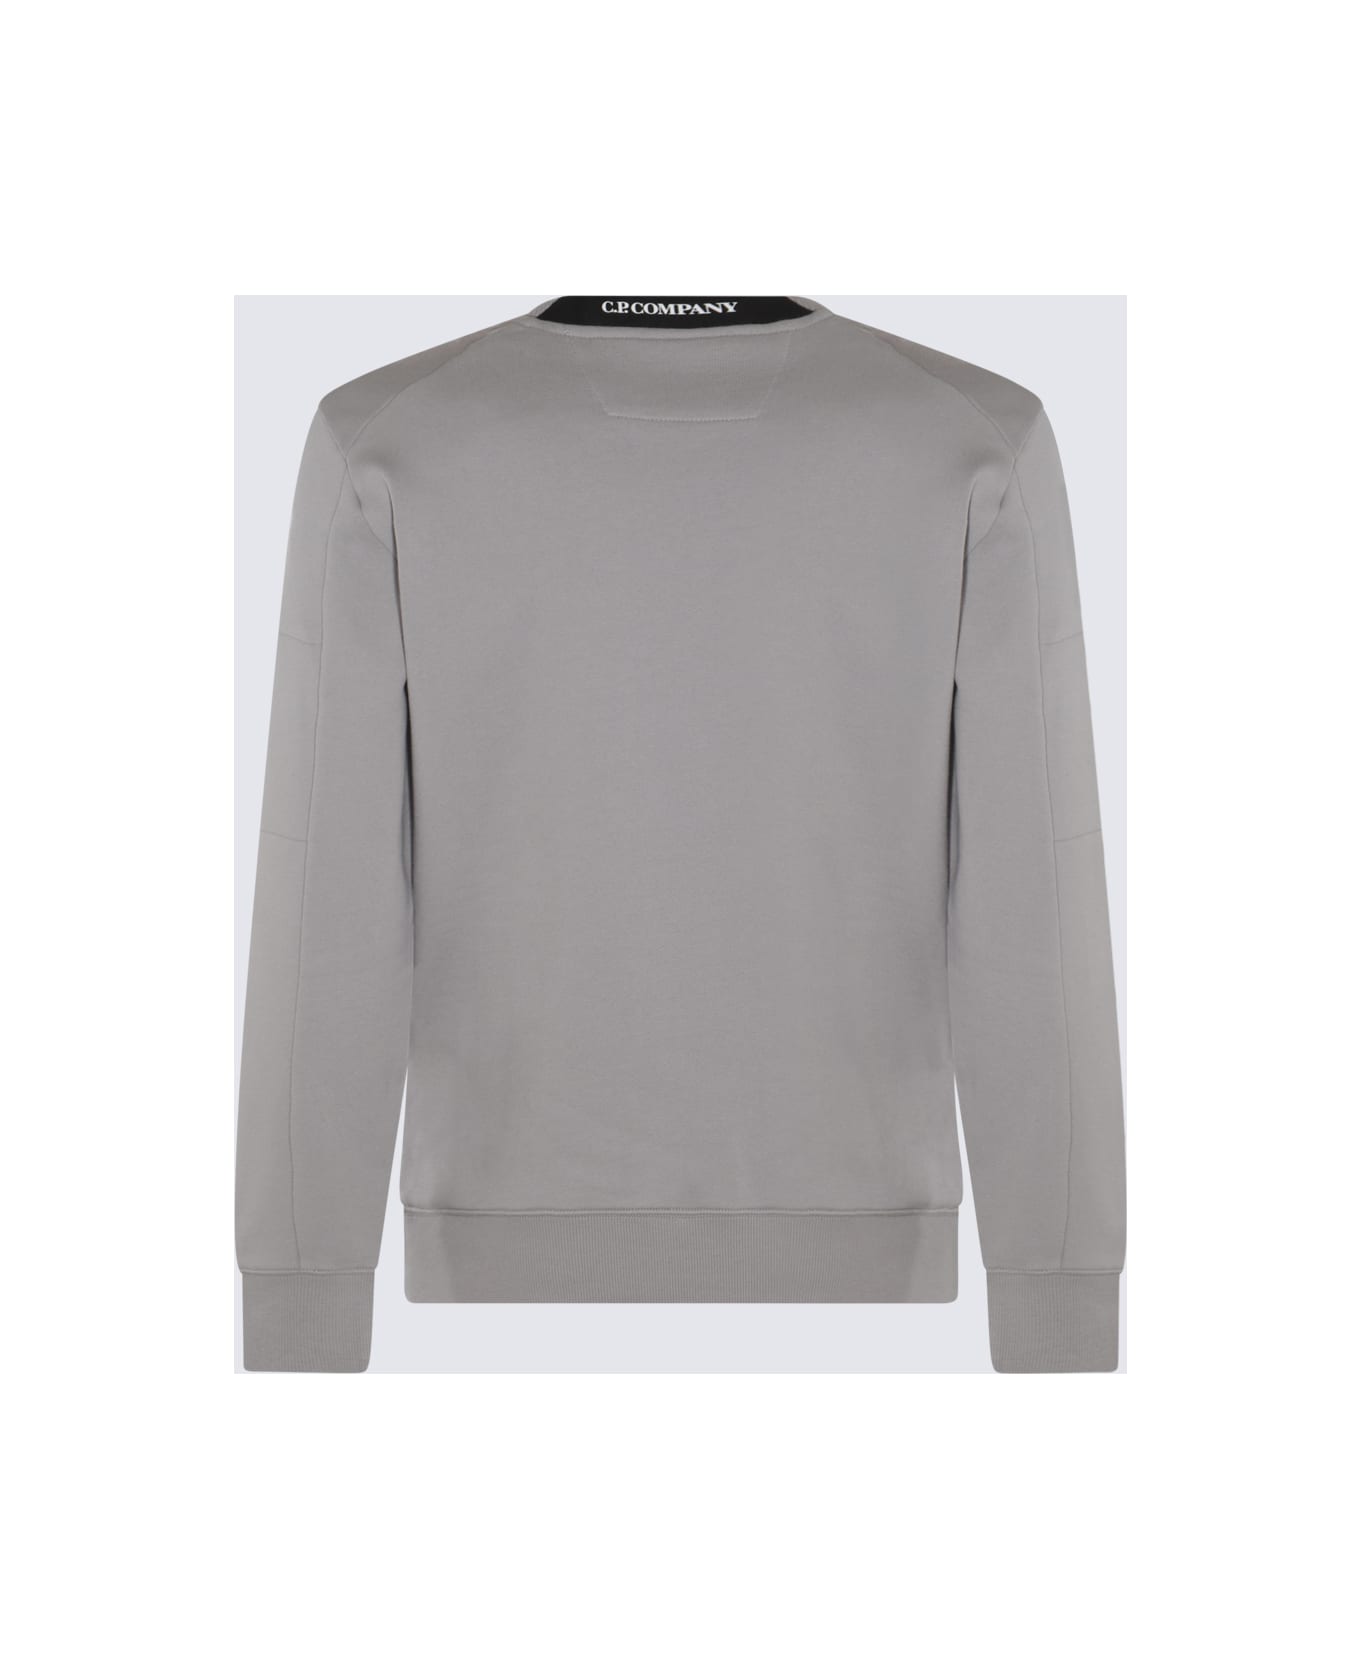 C.P. Company Grey Cotton Sweatshirt ニットウェア